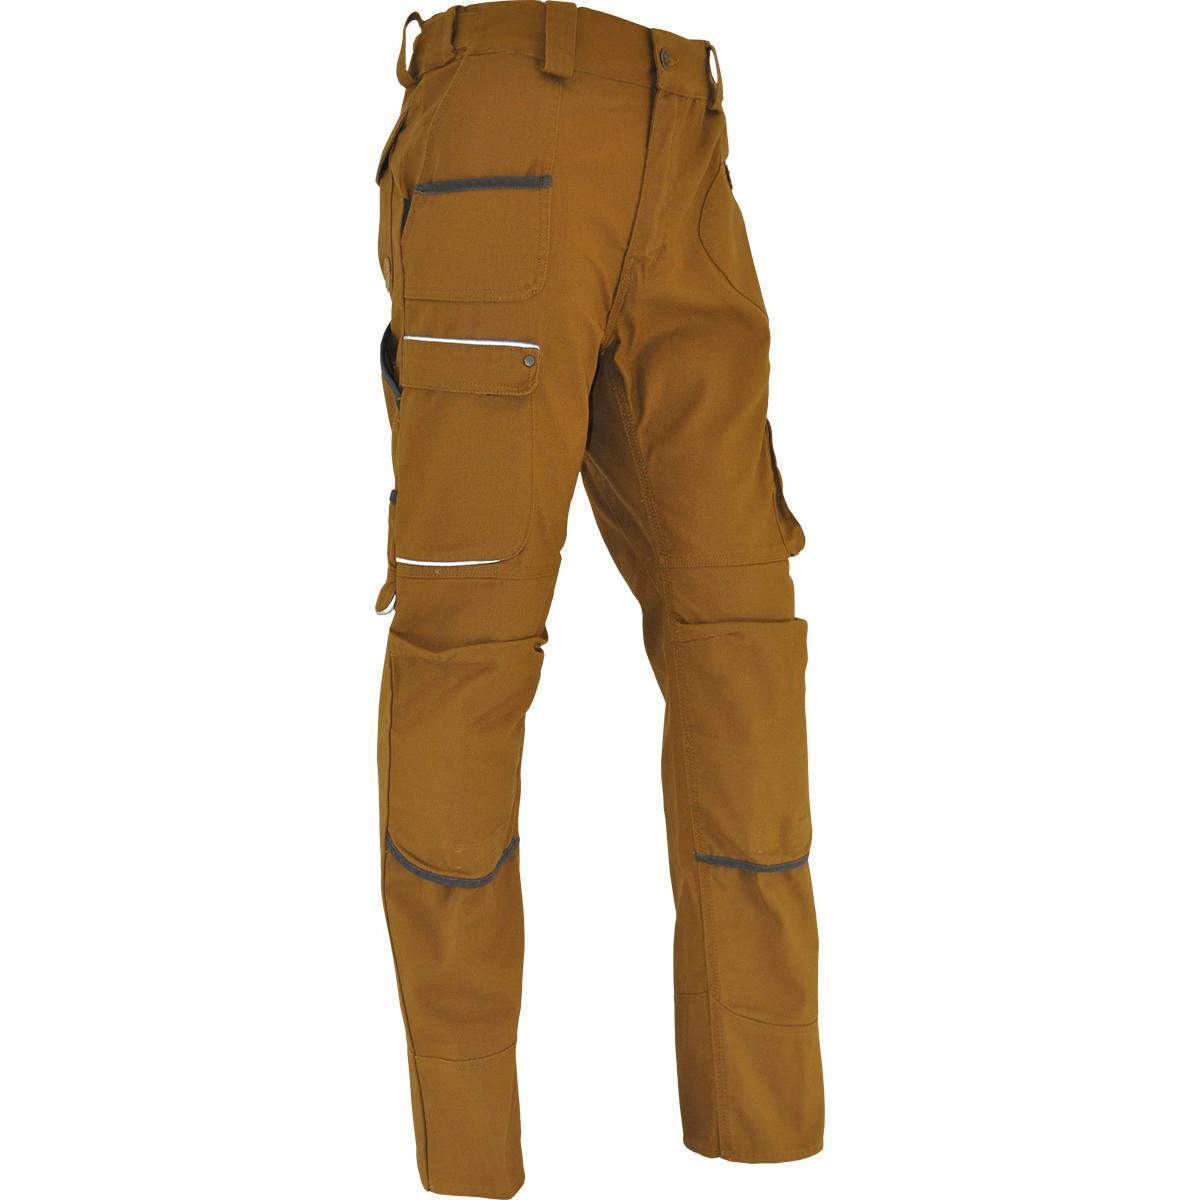 Pantalon chantier SAHARA Taille 48, poches multiples, genouillères incluses, bronze